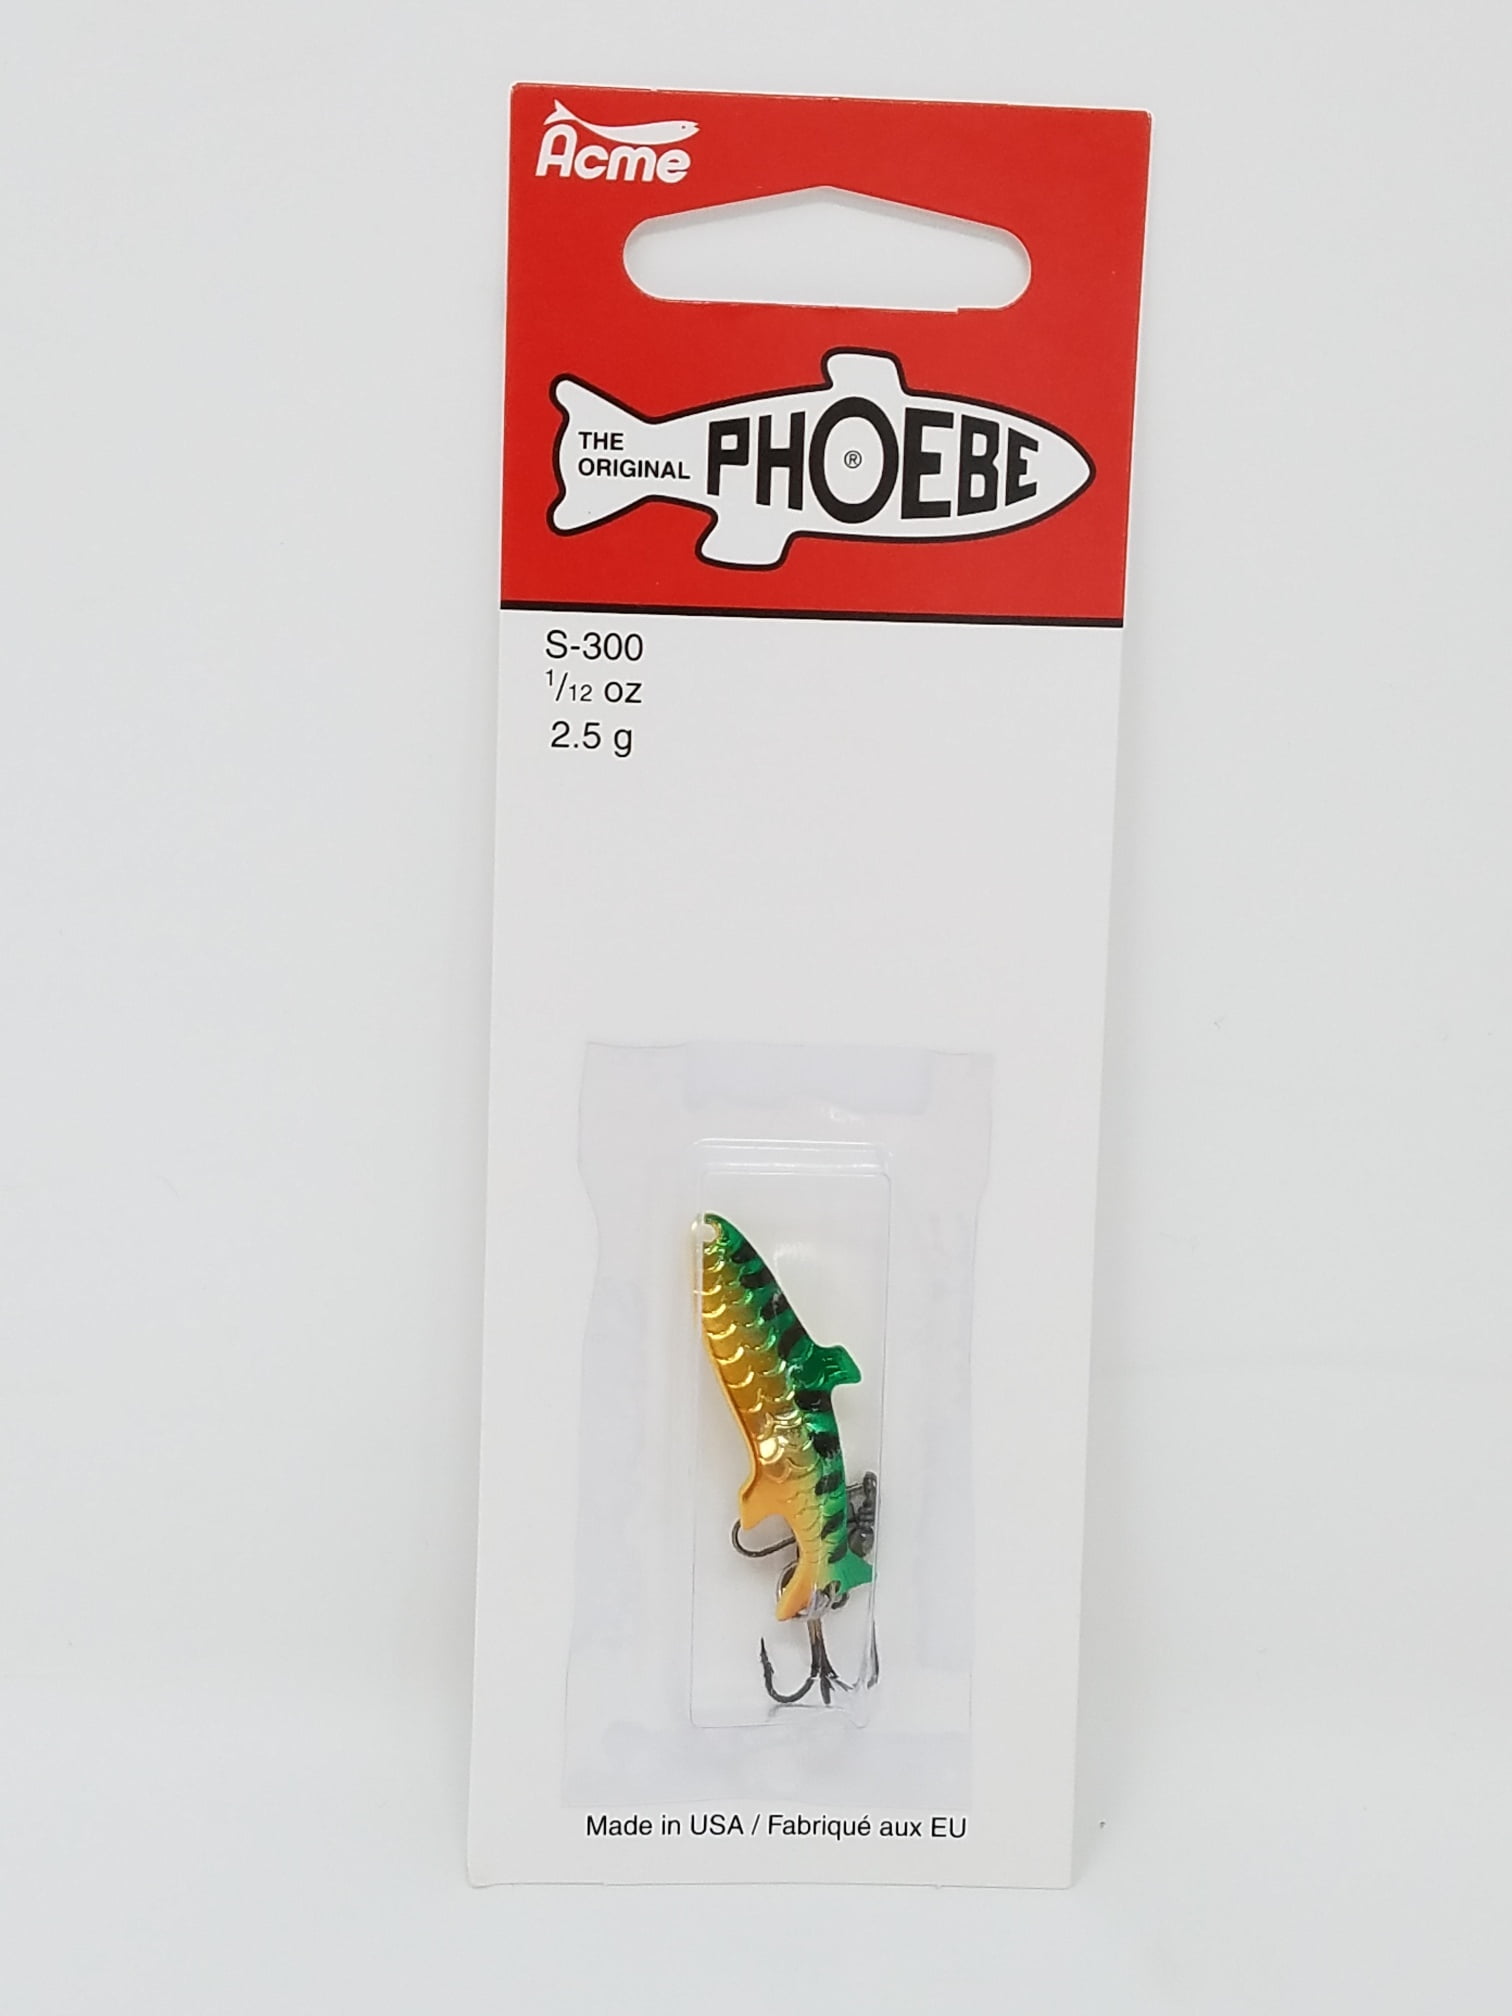 Acme Tackle Phoebe, Fishing Lure Spoon 1/12 oz., Metallic Perch